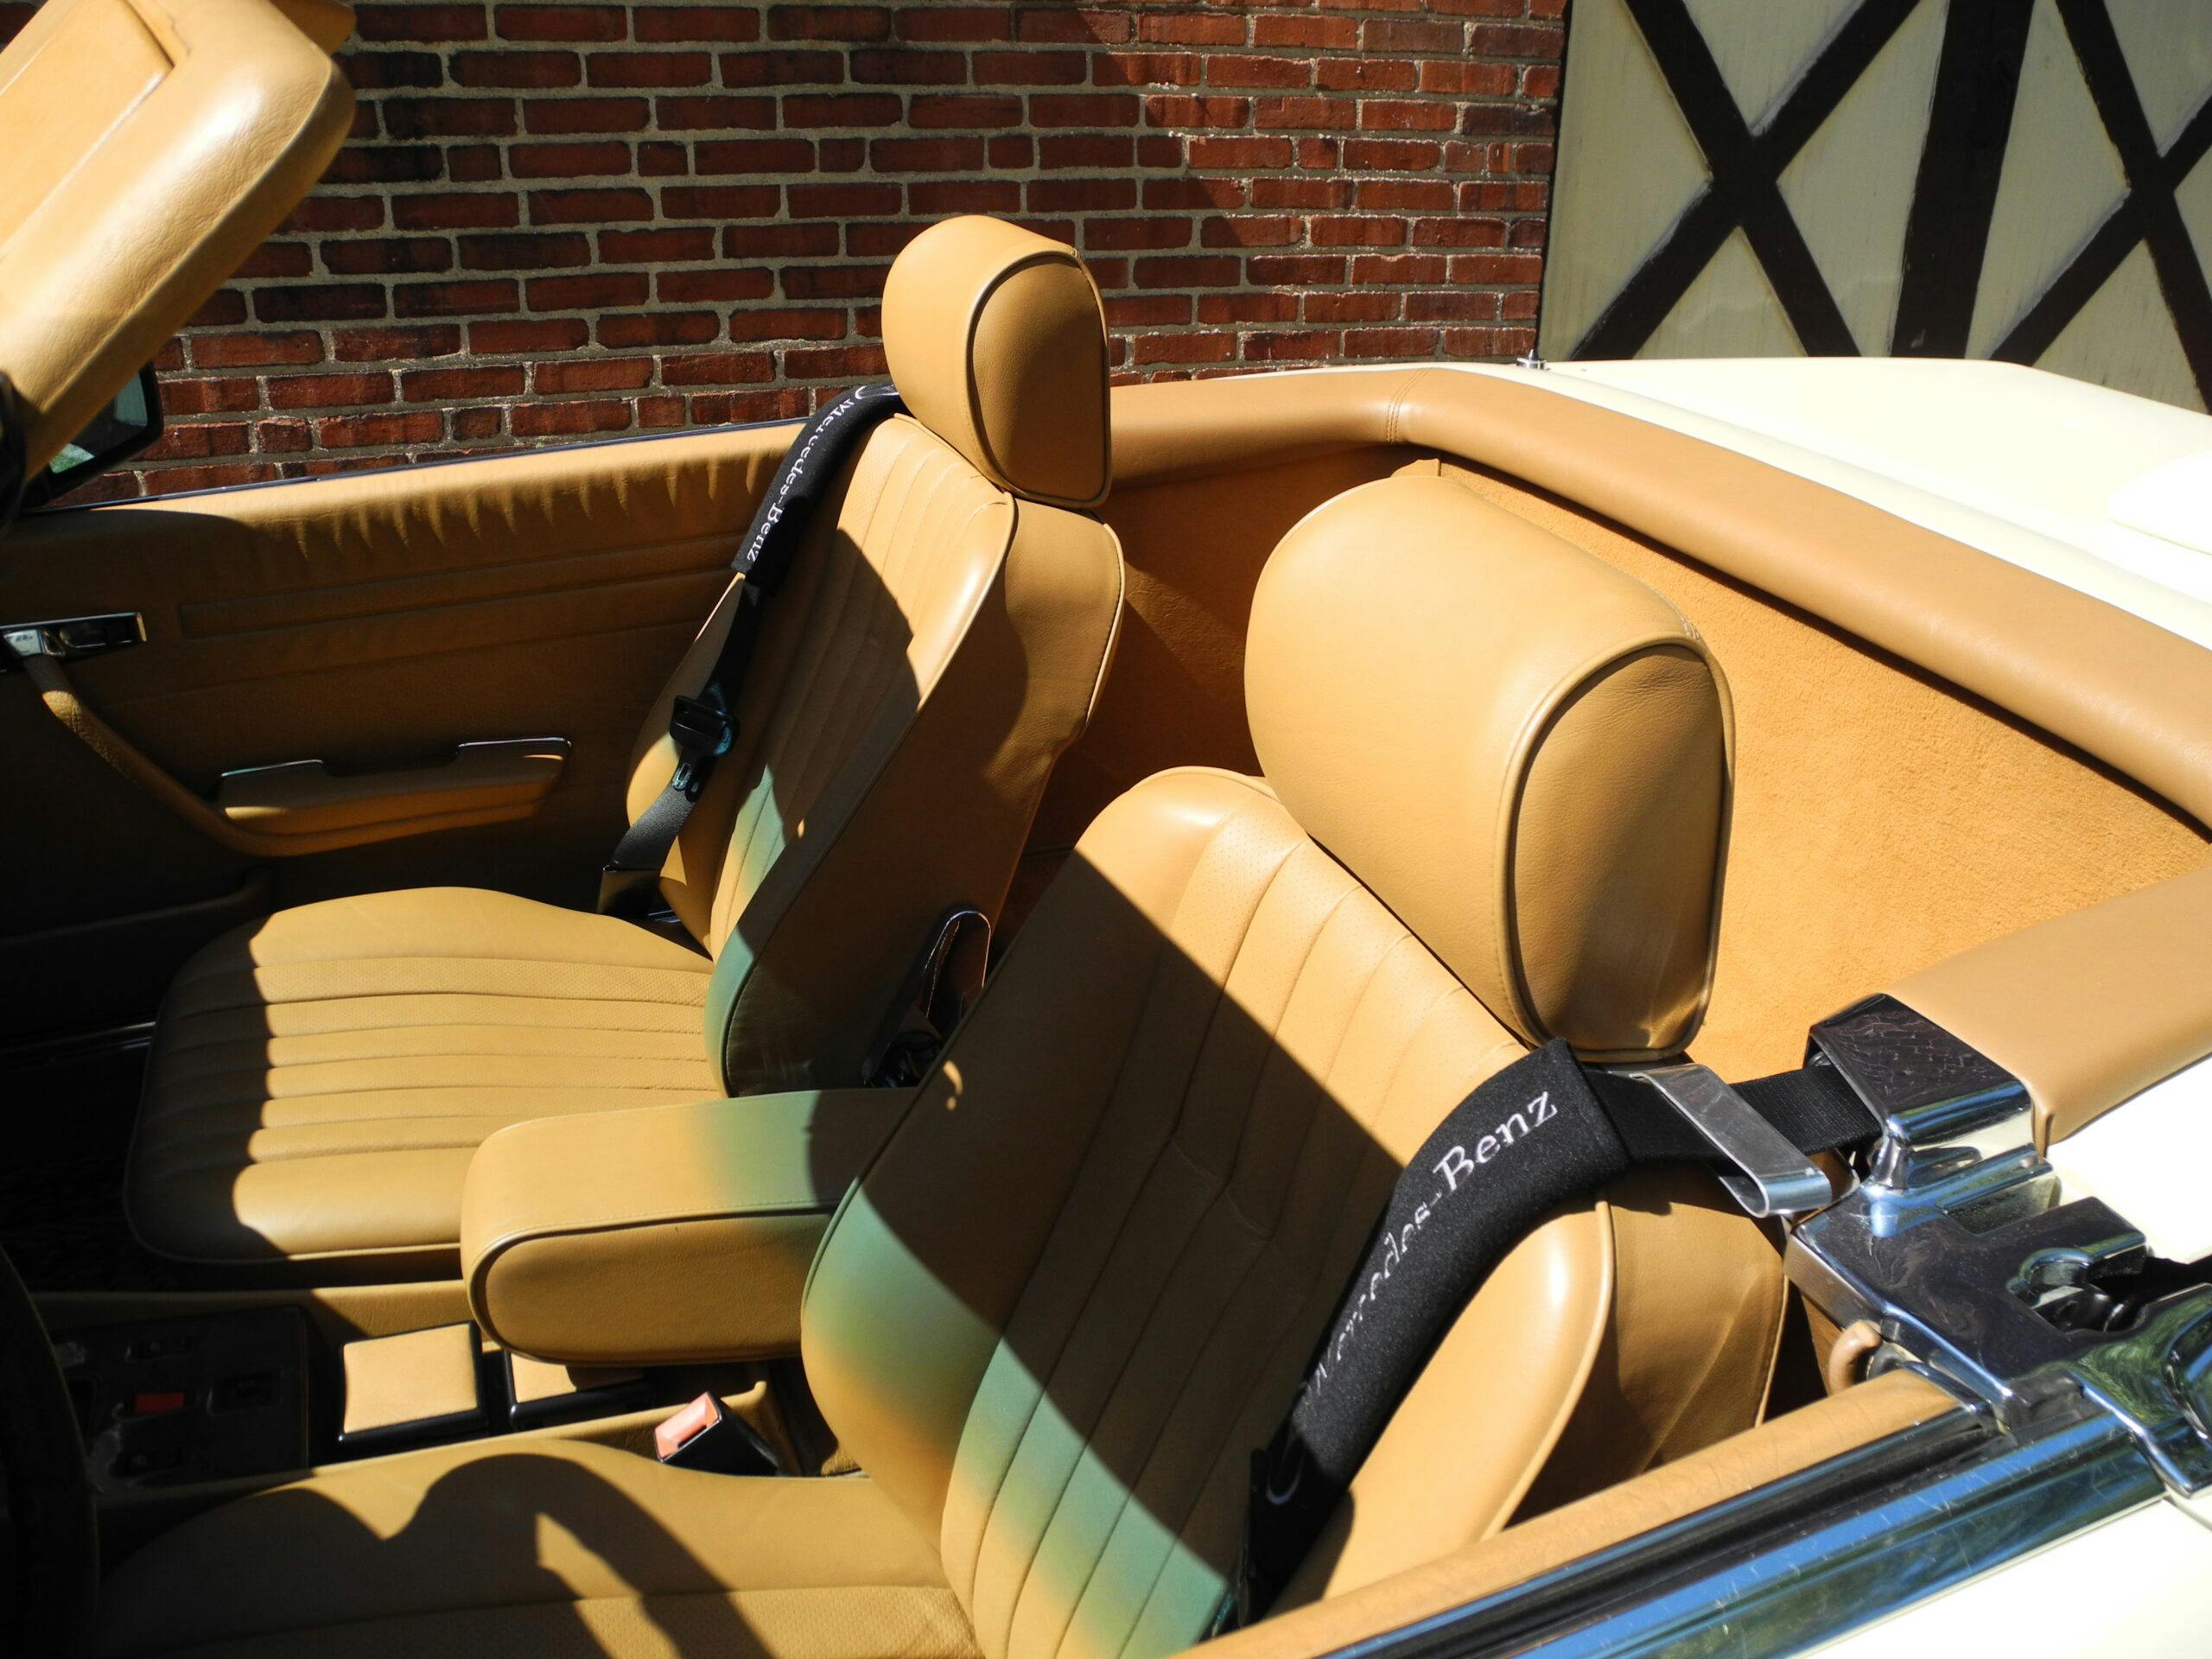 1986 Mercedes-Benz 560SL interior leather seats